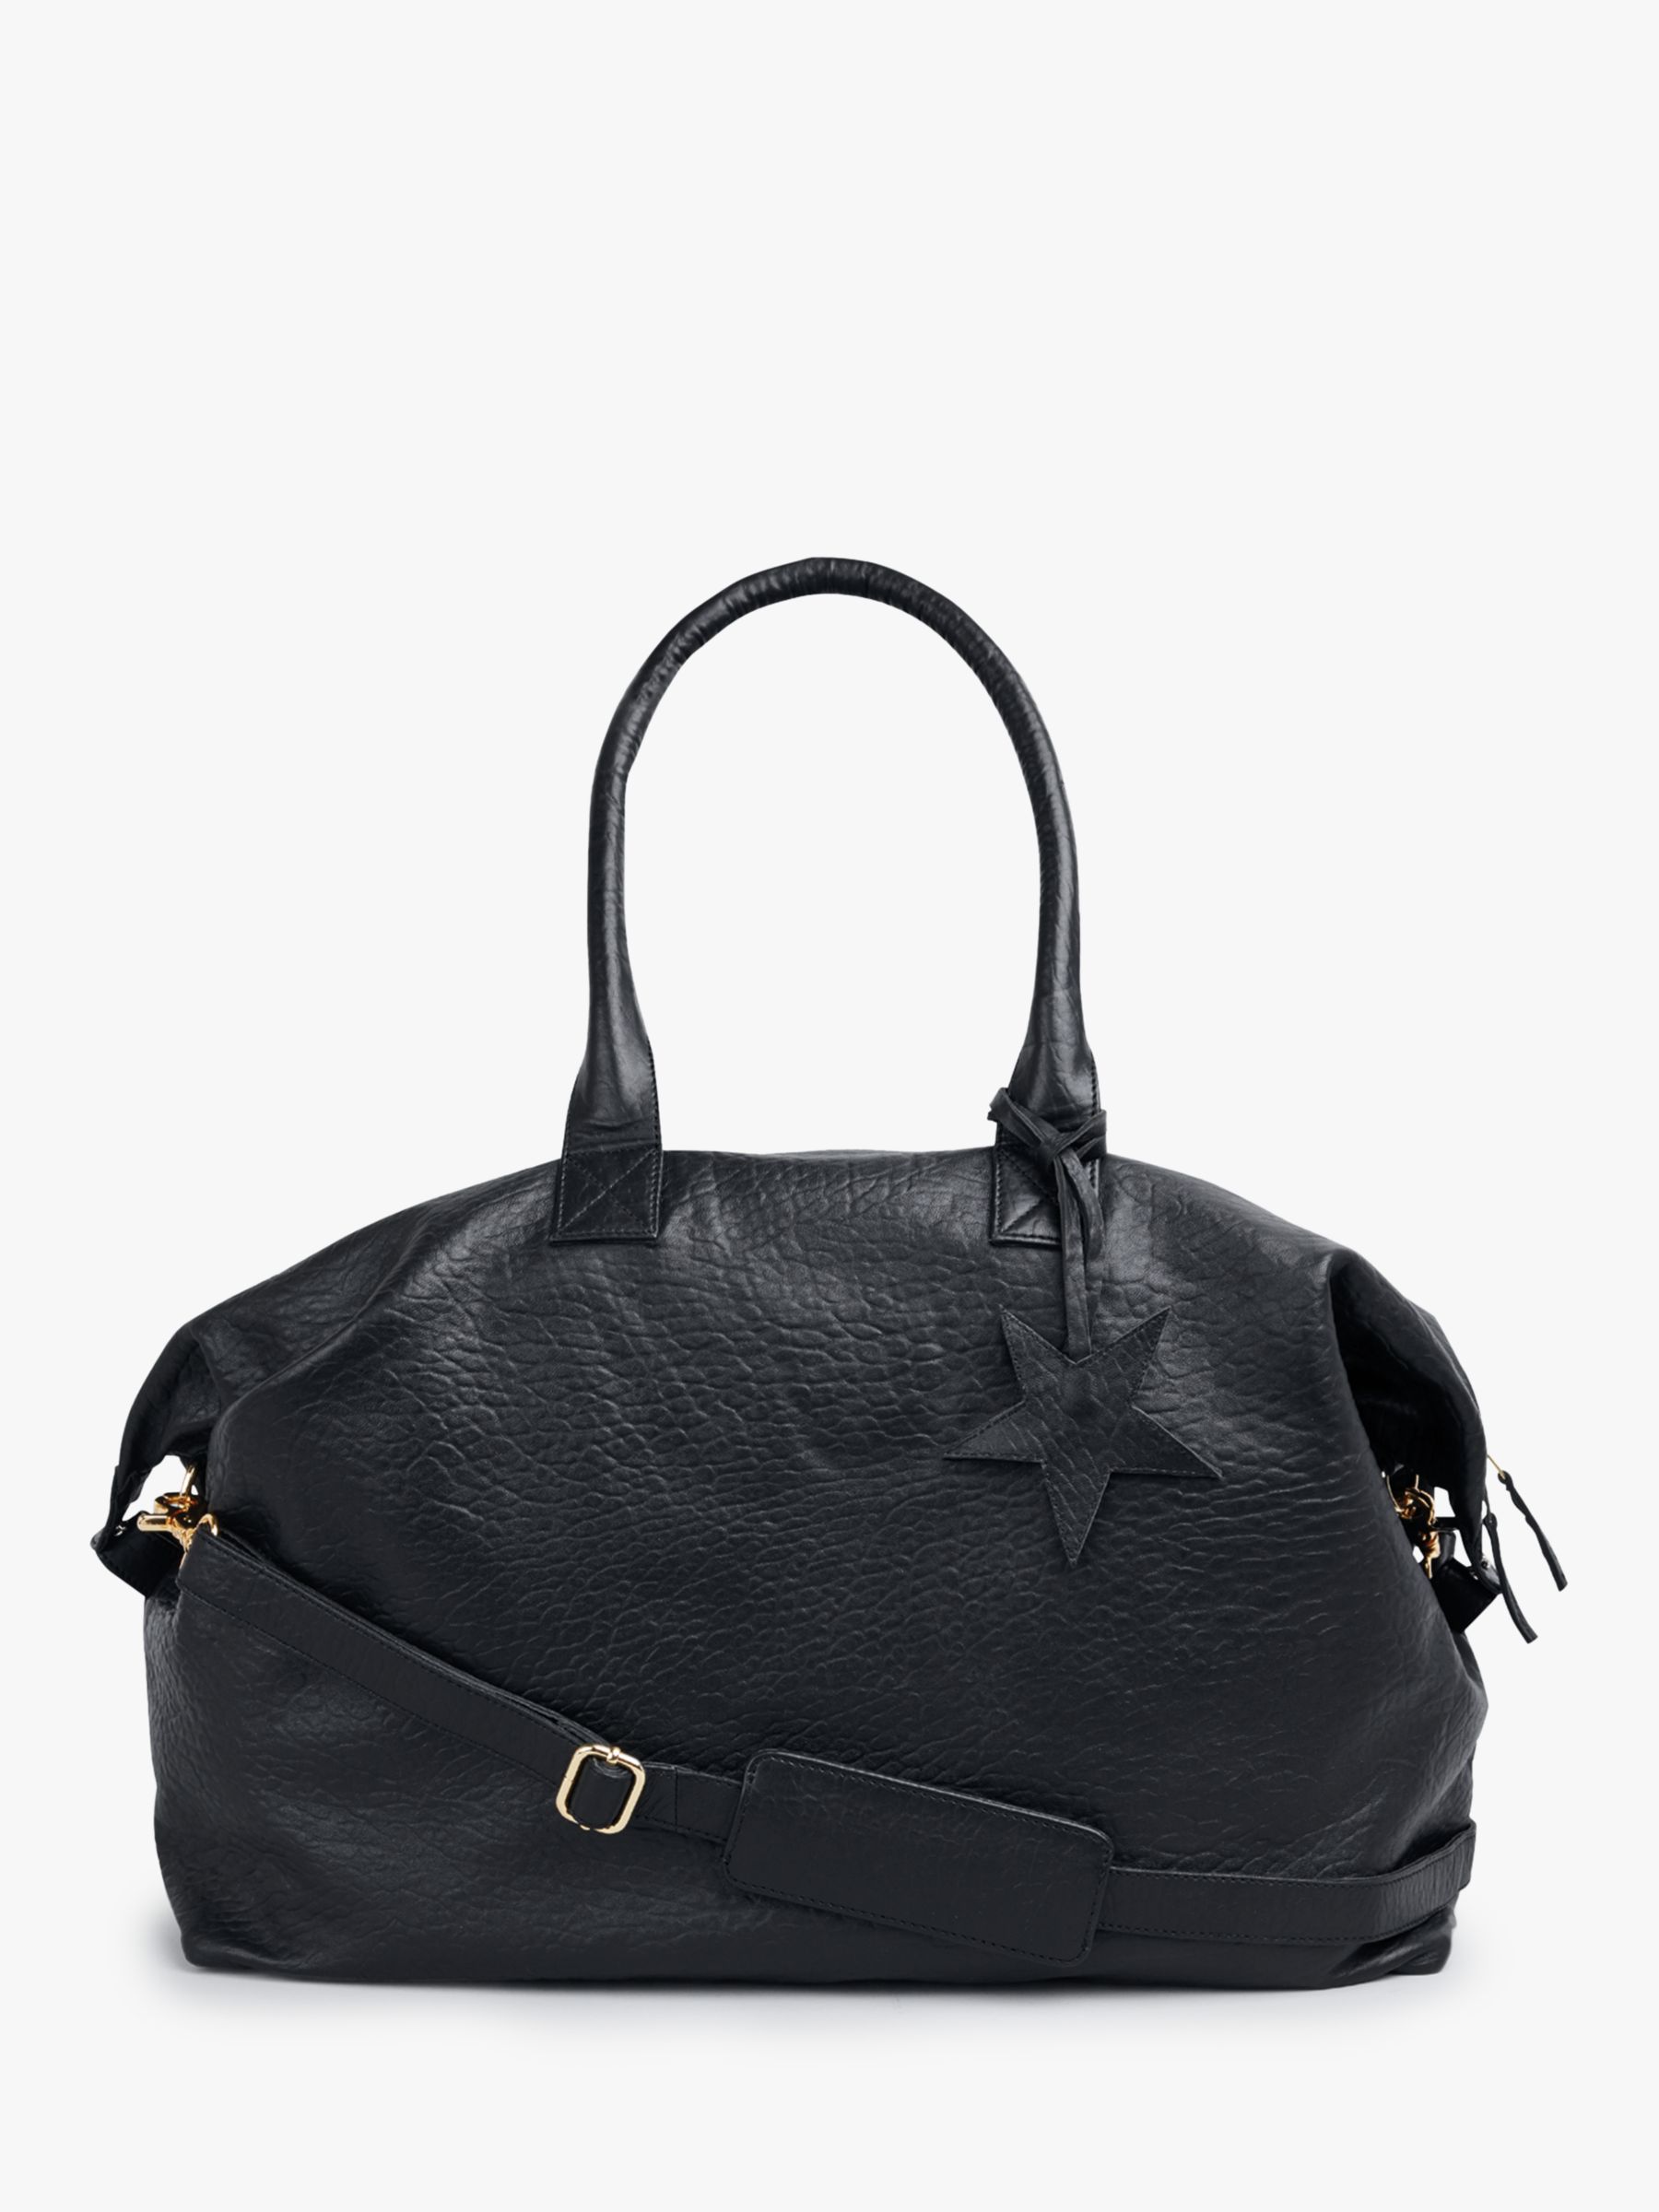 hush Gabby Weekend Leather Bag, Black at John Lewis & Partners